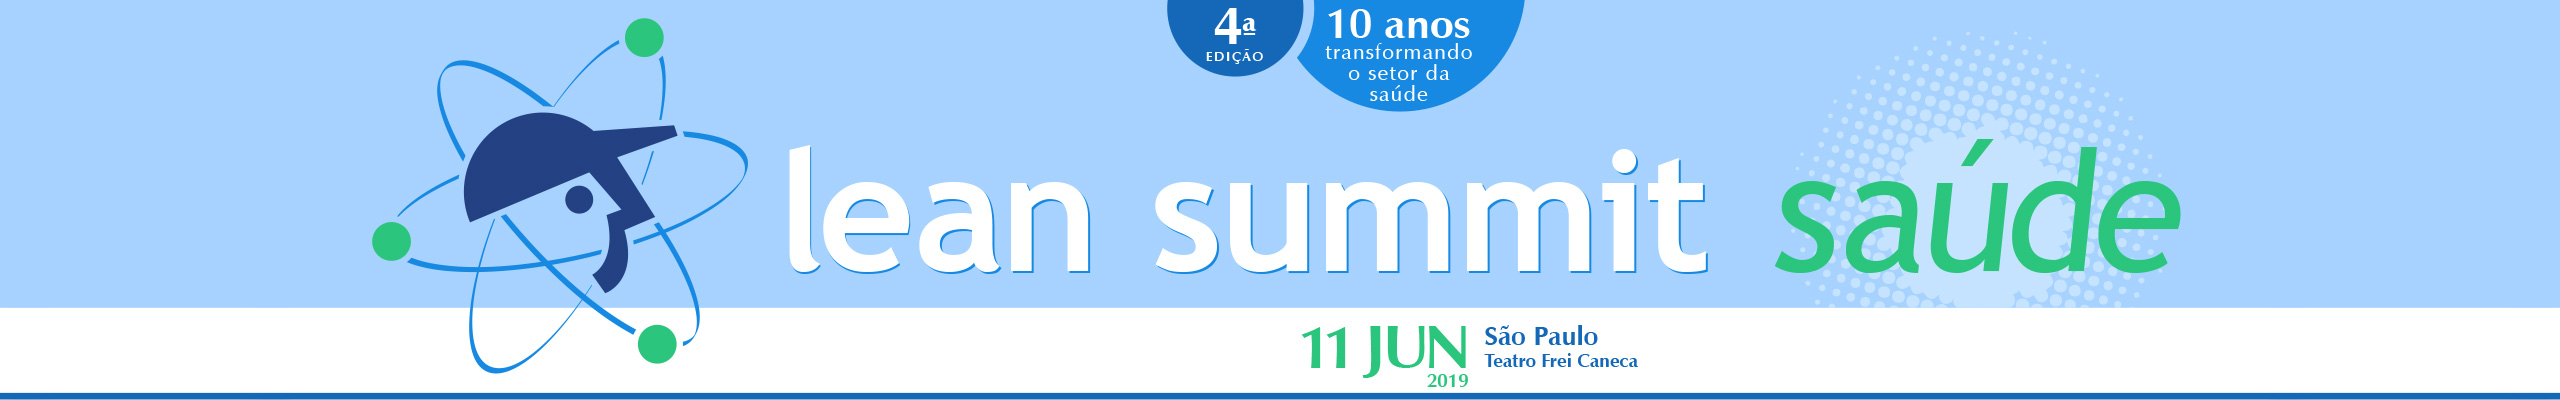 Lean Summit Saúde 2019